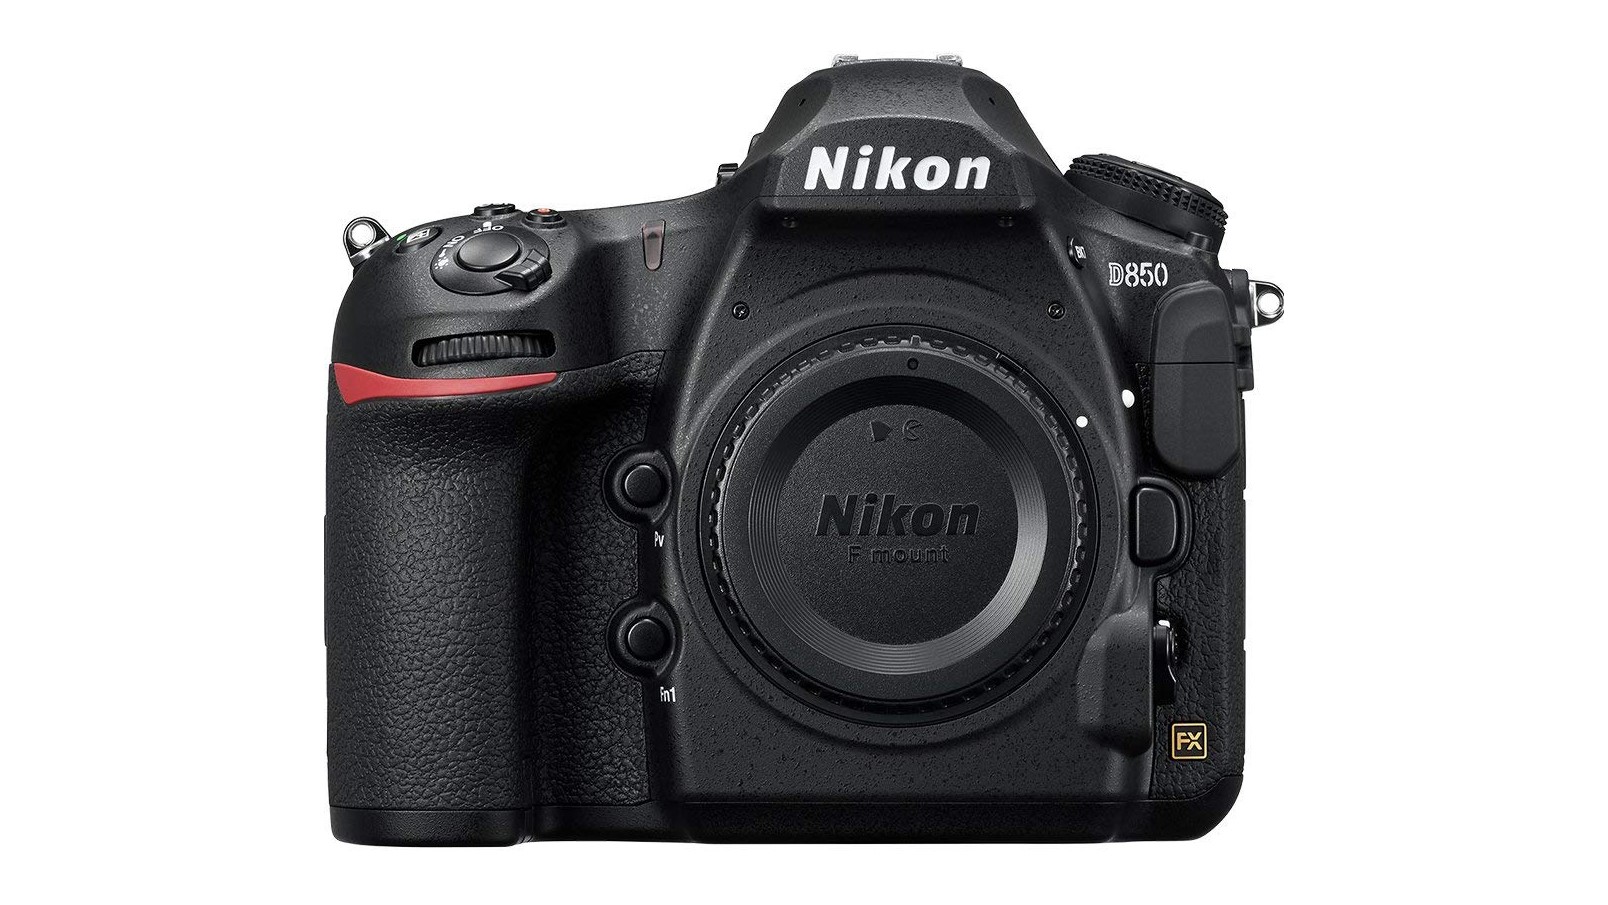 Nikon D850 DSLR camera body